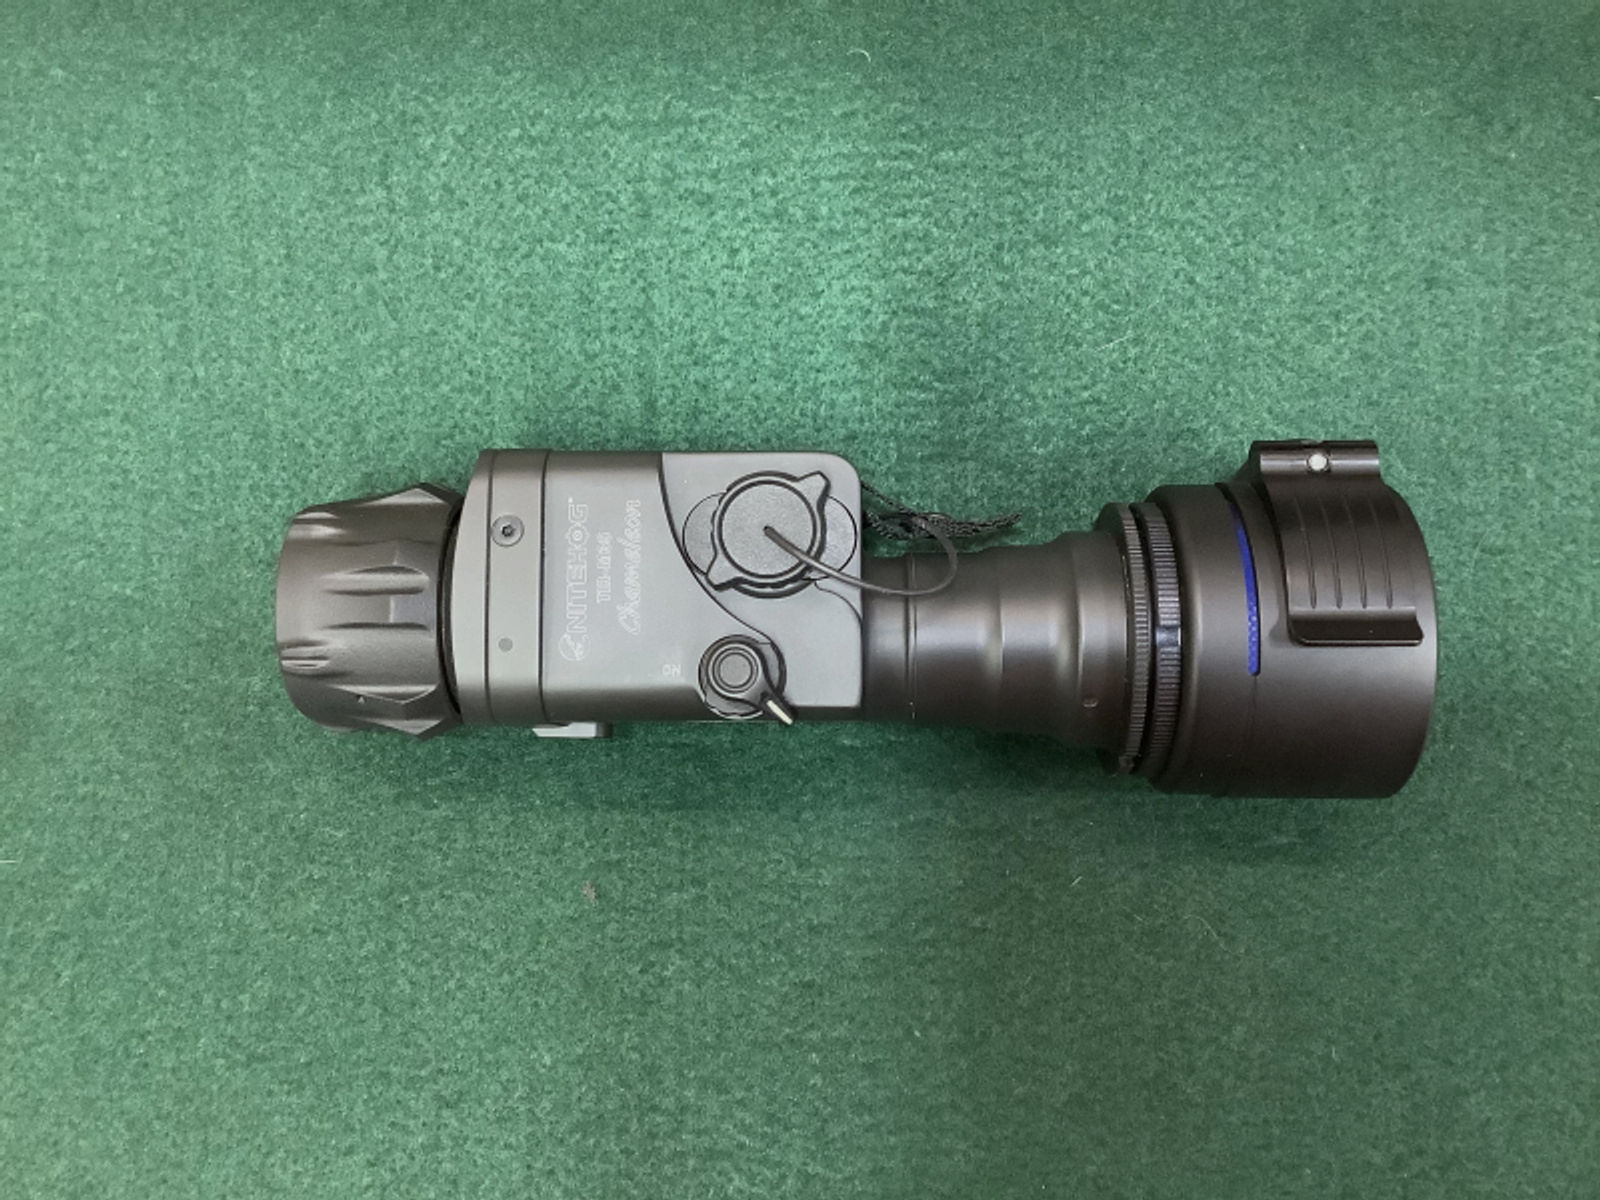 Wärmebildkamera Nitehog Chameleon TIR M35 mit 62er Smartclip Adapter Gebraucht